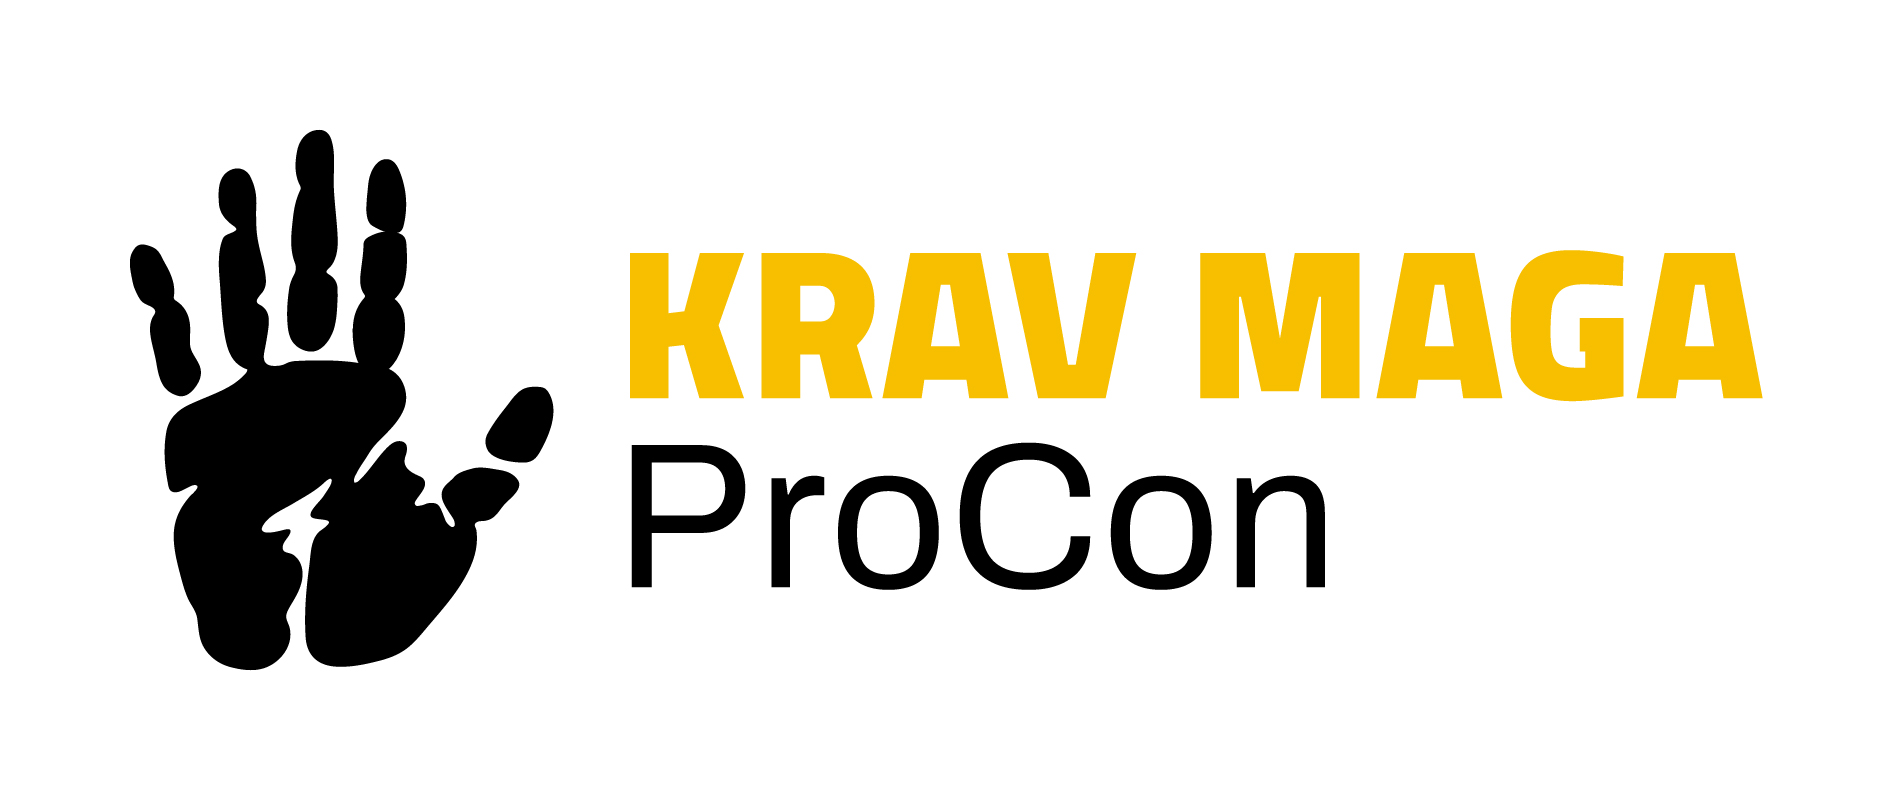 Marke2_kravmaga_procon_logo_pos_2_R